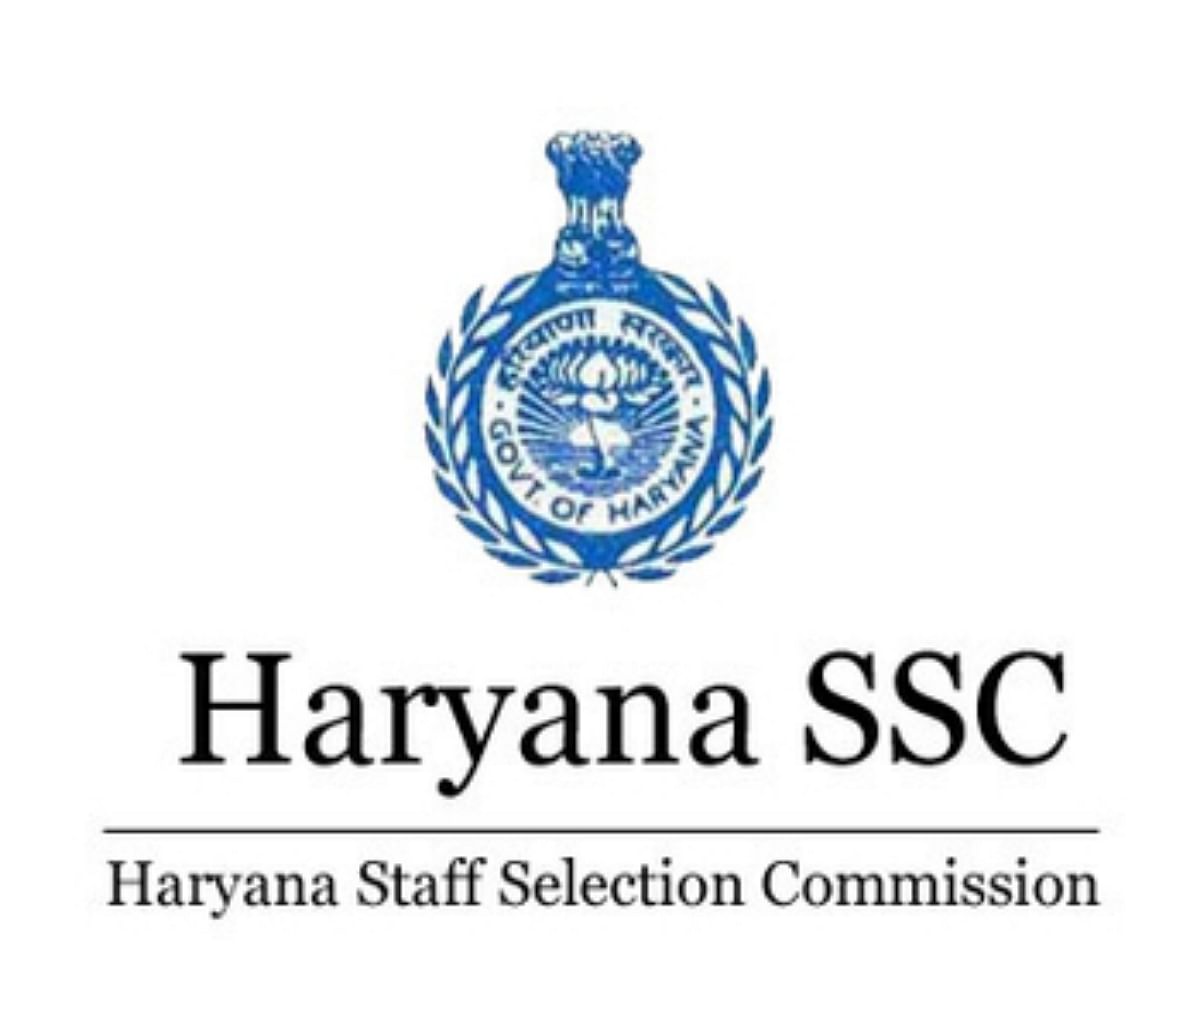 HSSC Assistant Lineman Result 2021 Declared, Check Merit List Here